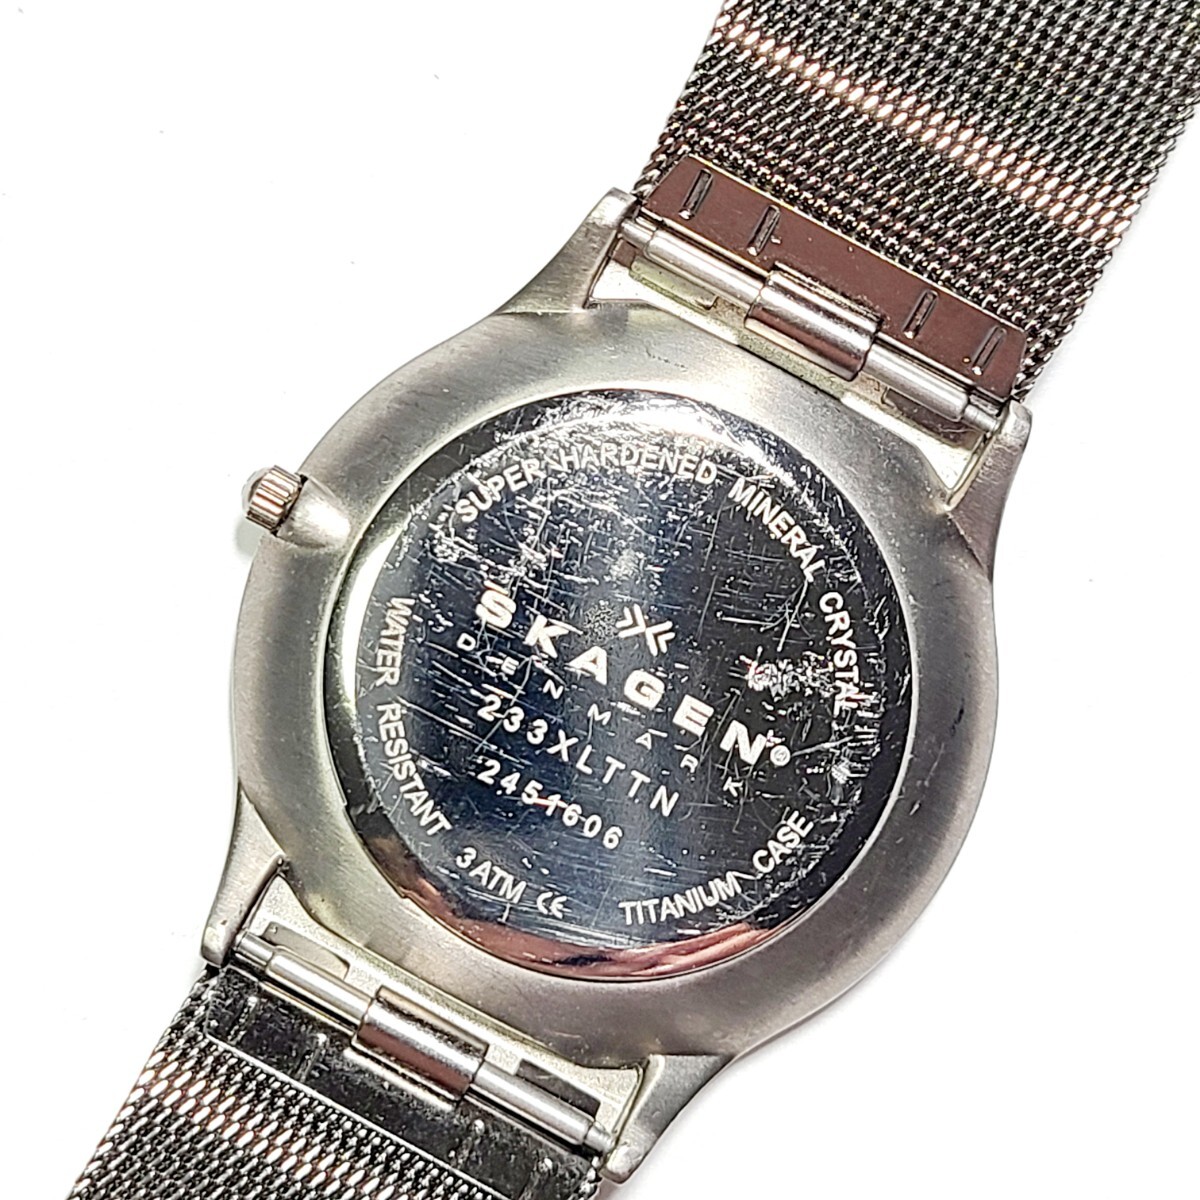 JM11LL SKAGEN スカーゲン 腕時計 メンズ アナログ 時計 ステンレス メッシュベルト シルバー GRENEN グレーネン 233XLTTN クォーツ _画像4